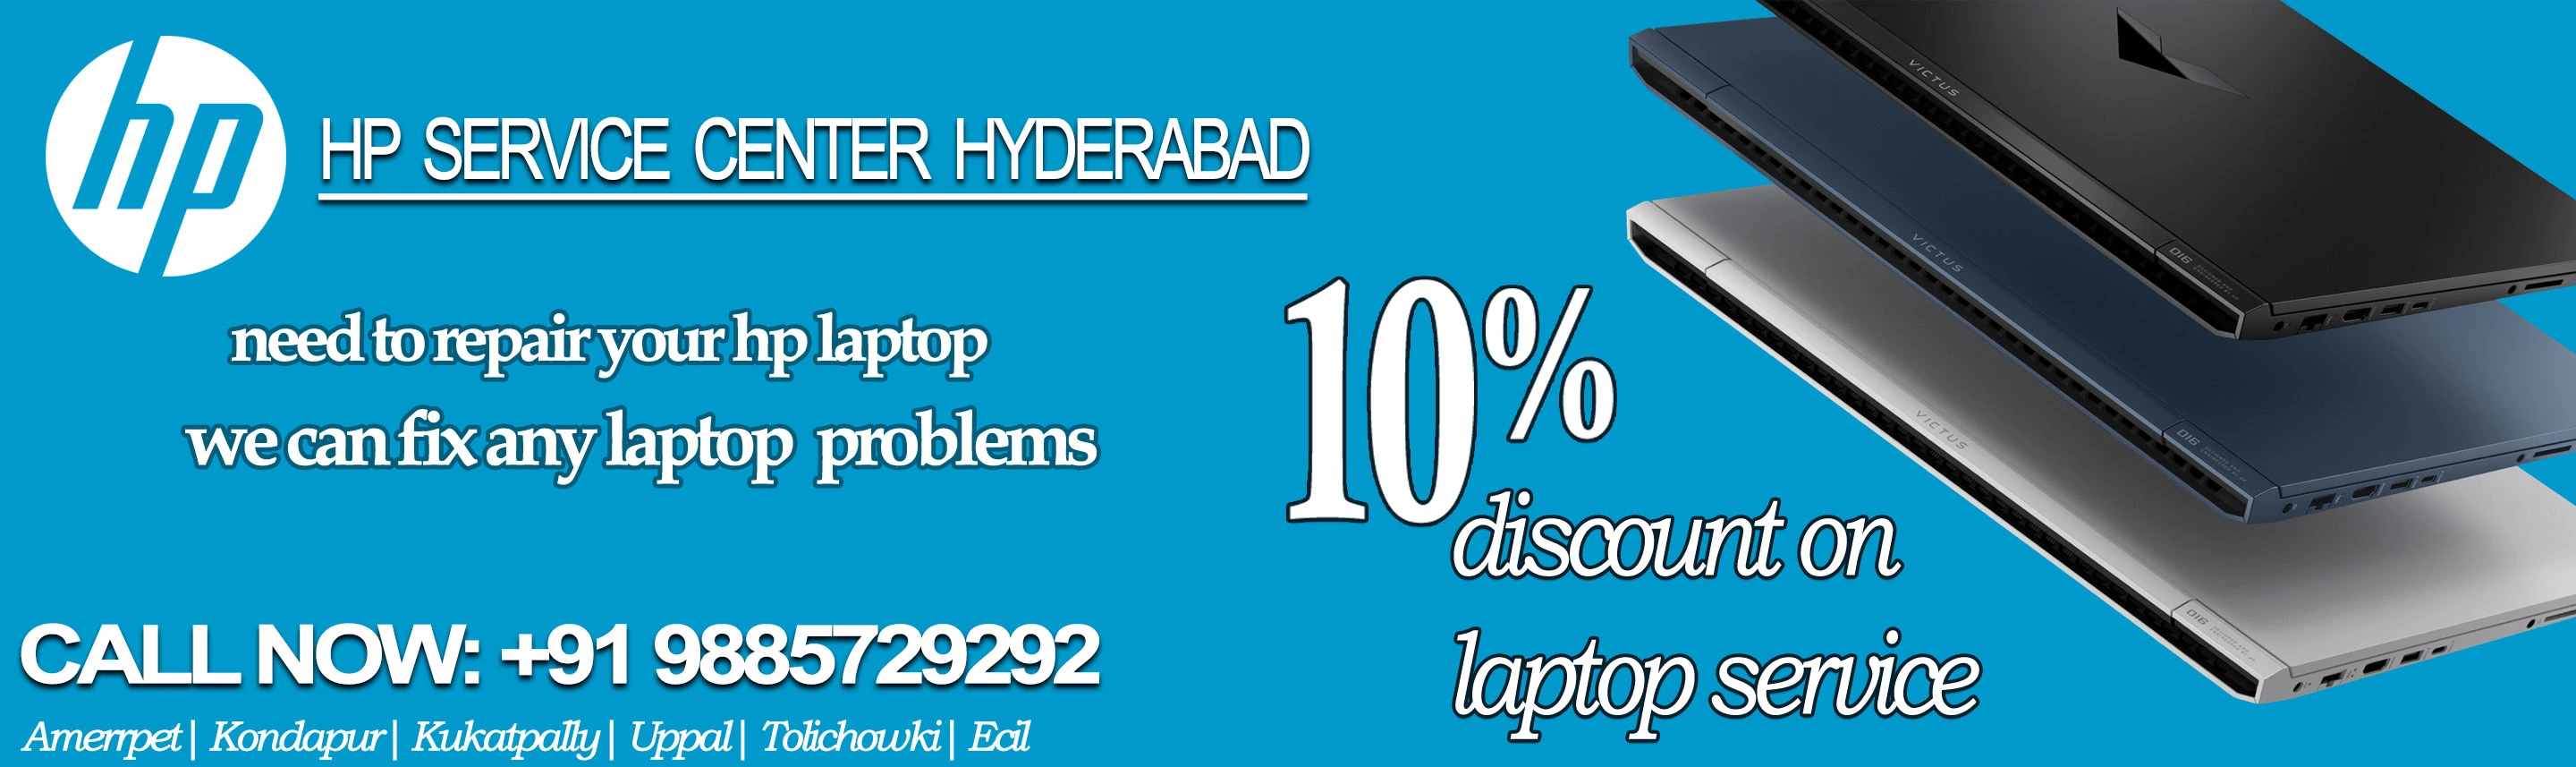 hp laptop service center hyderabad